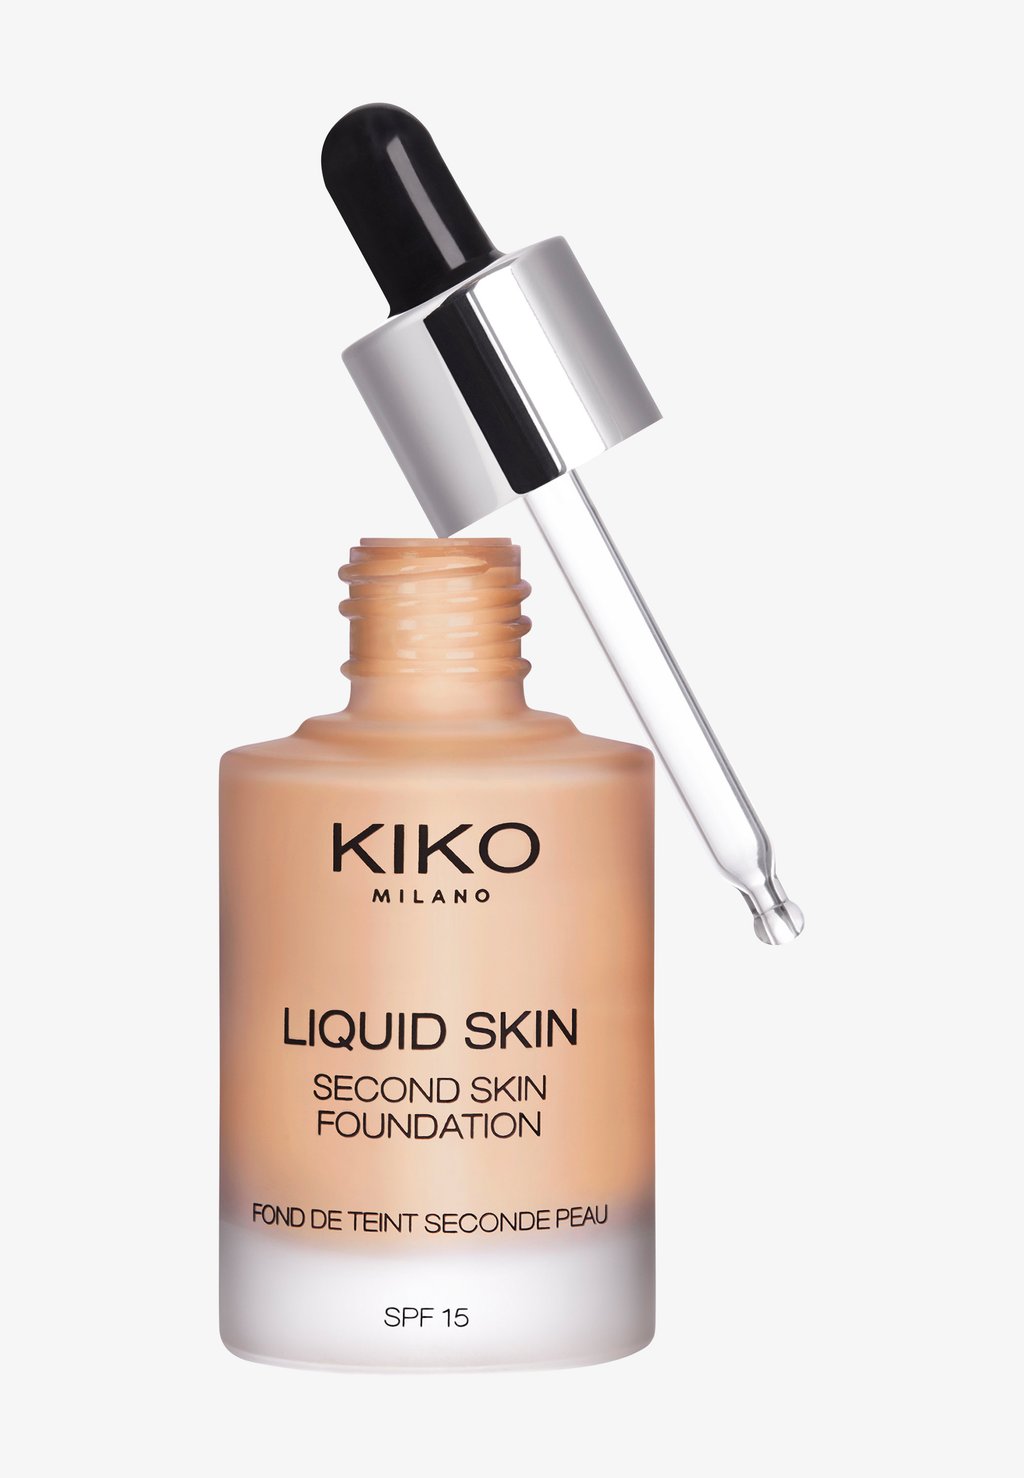 Тональный крем Liquid Skin Second Skin Foundation KIKO Milano, цвет 40 neutral